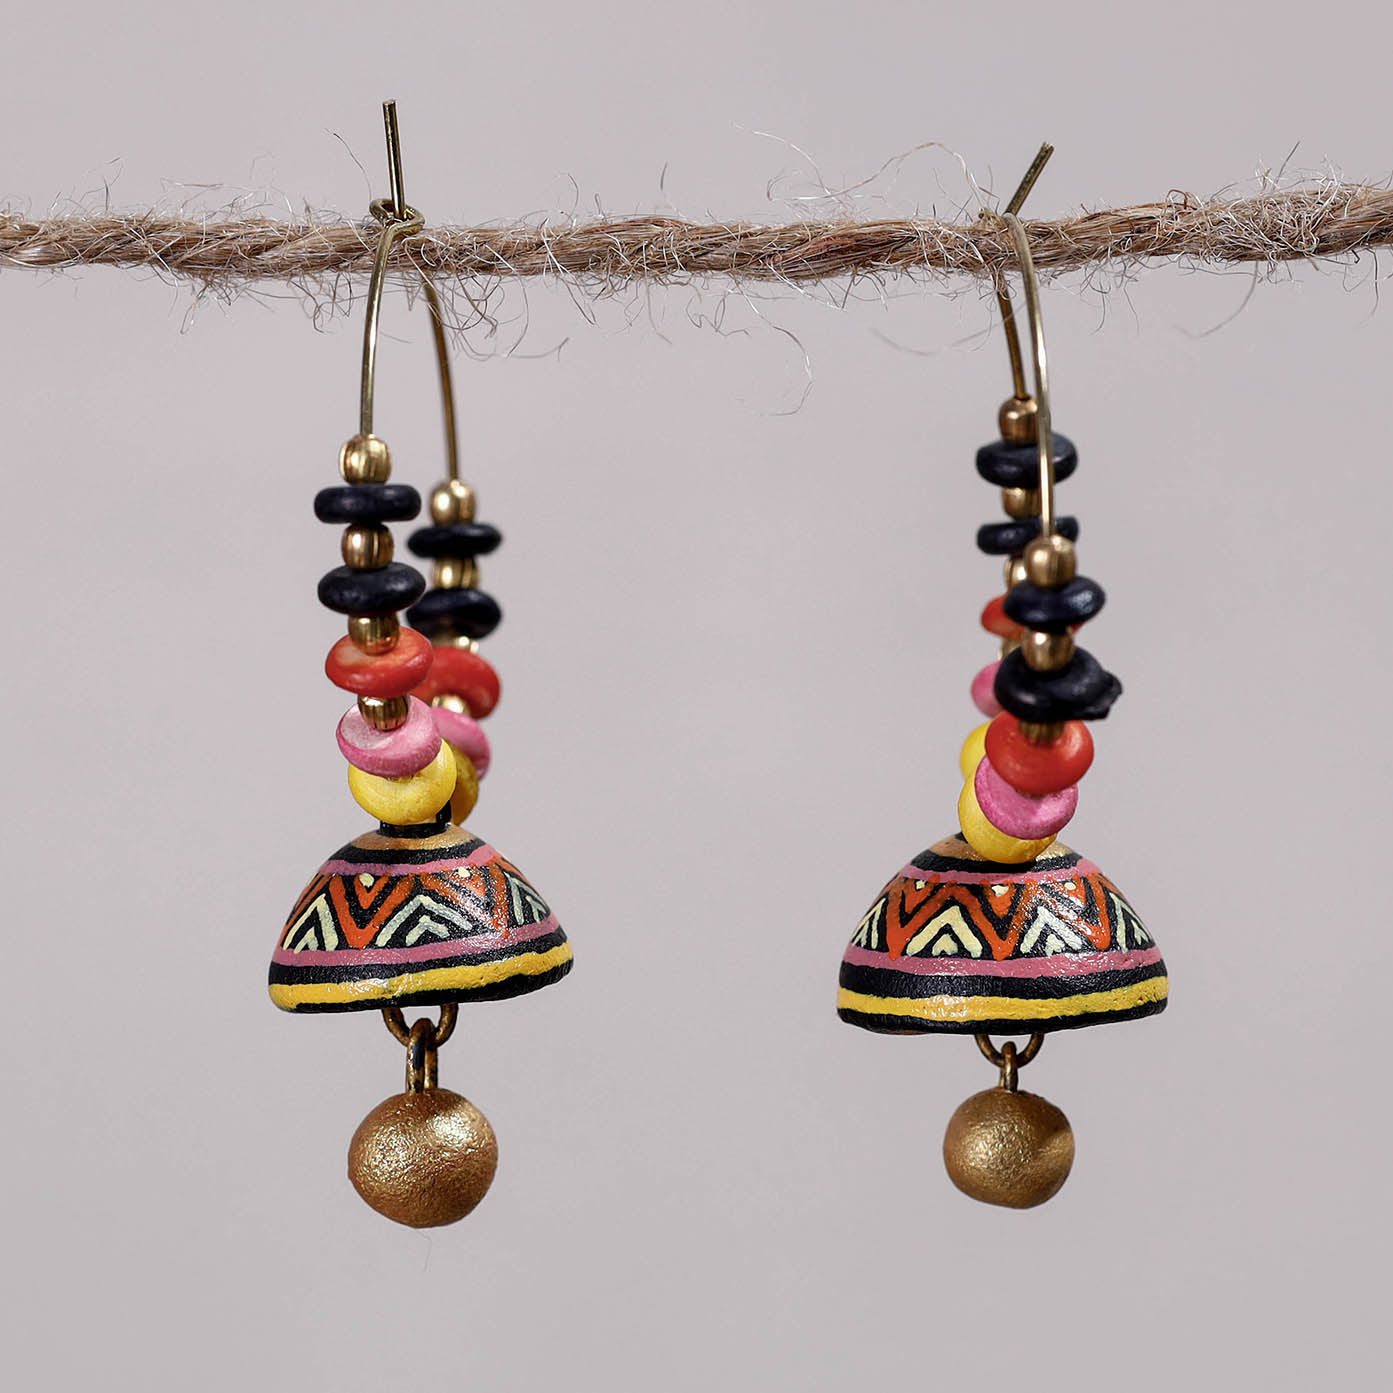 Buy Paper Quilling Material Online! – Khushi Handicrafts